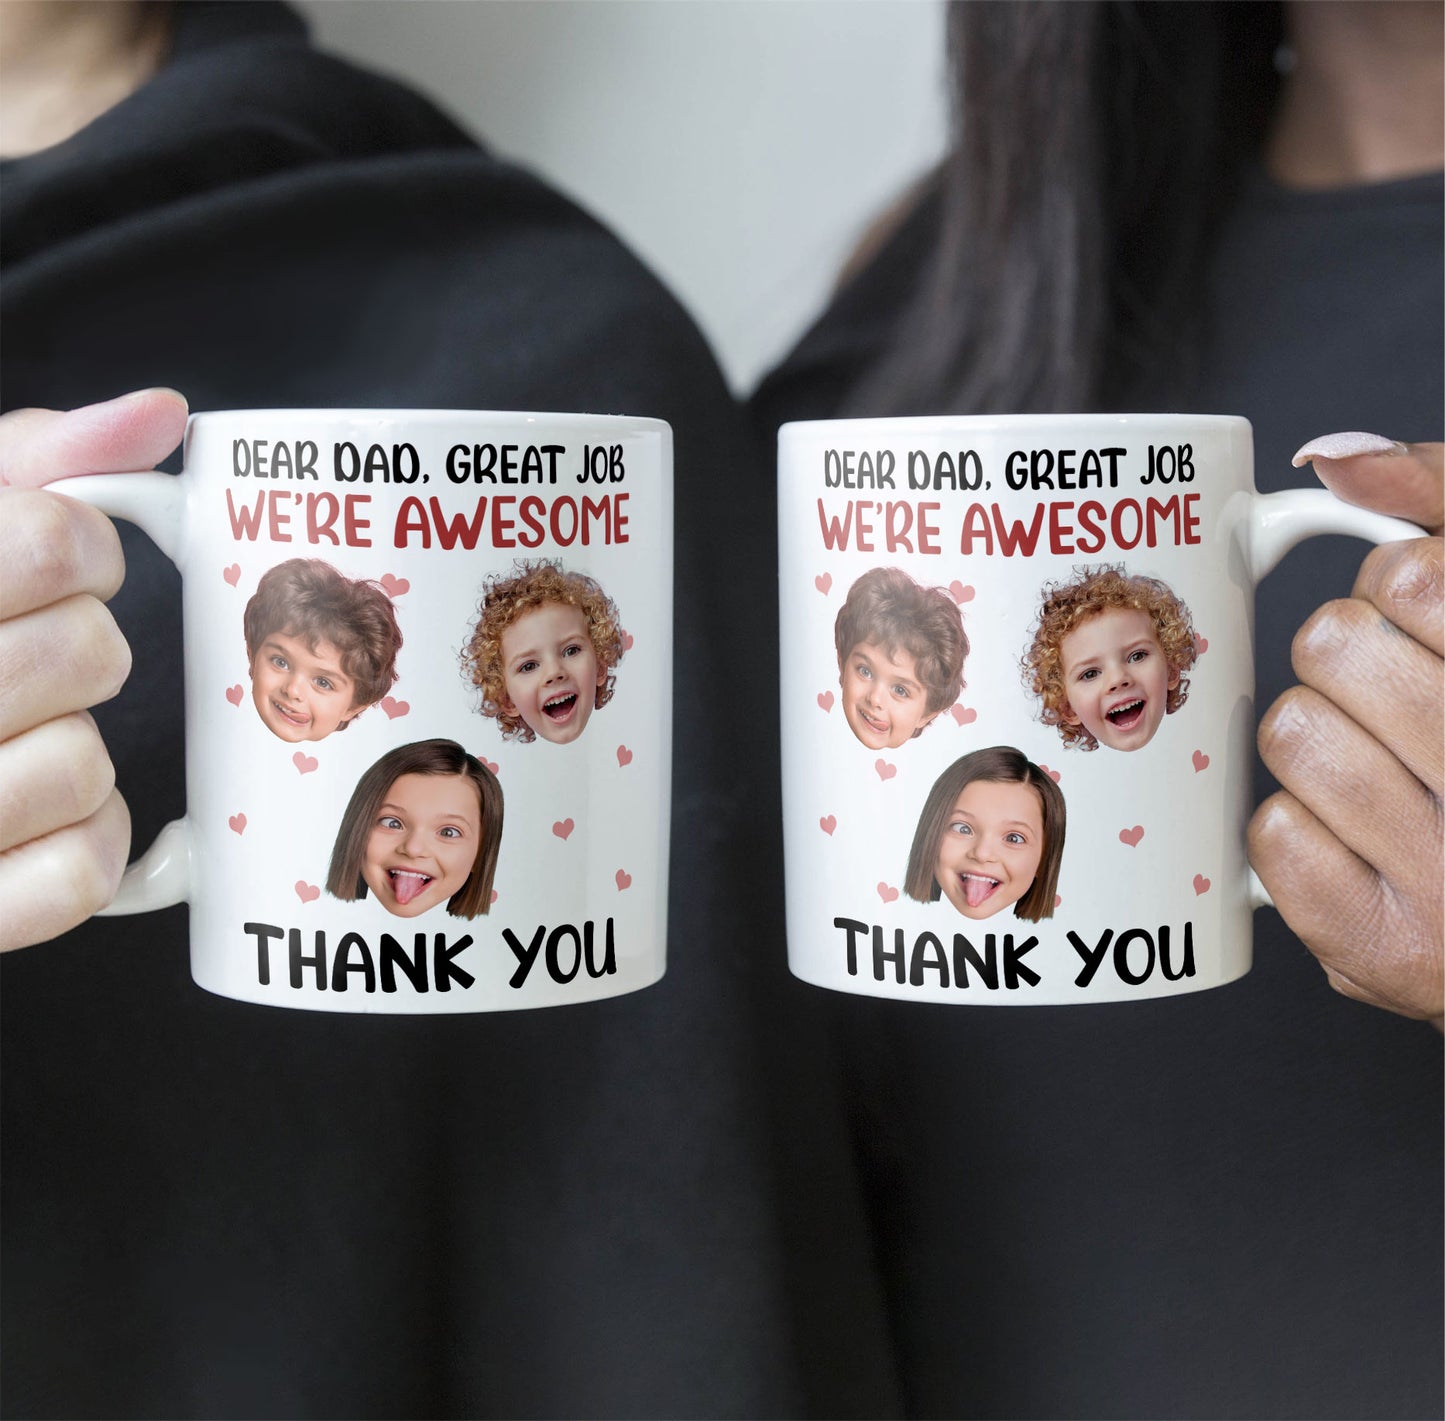 Dear Dad, Great Job - Personalized Photo Mug